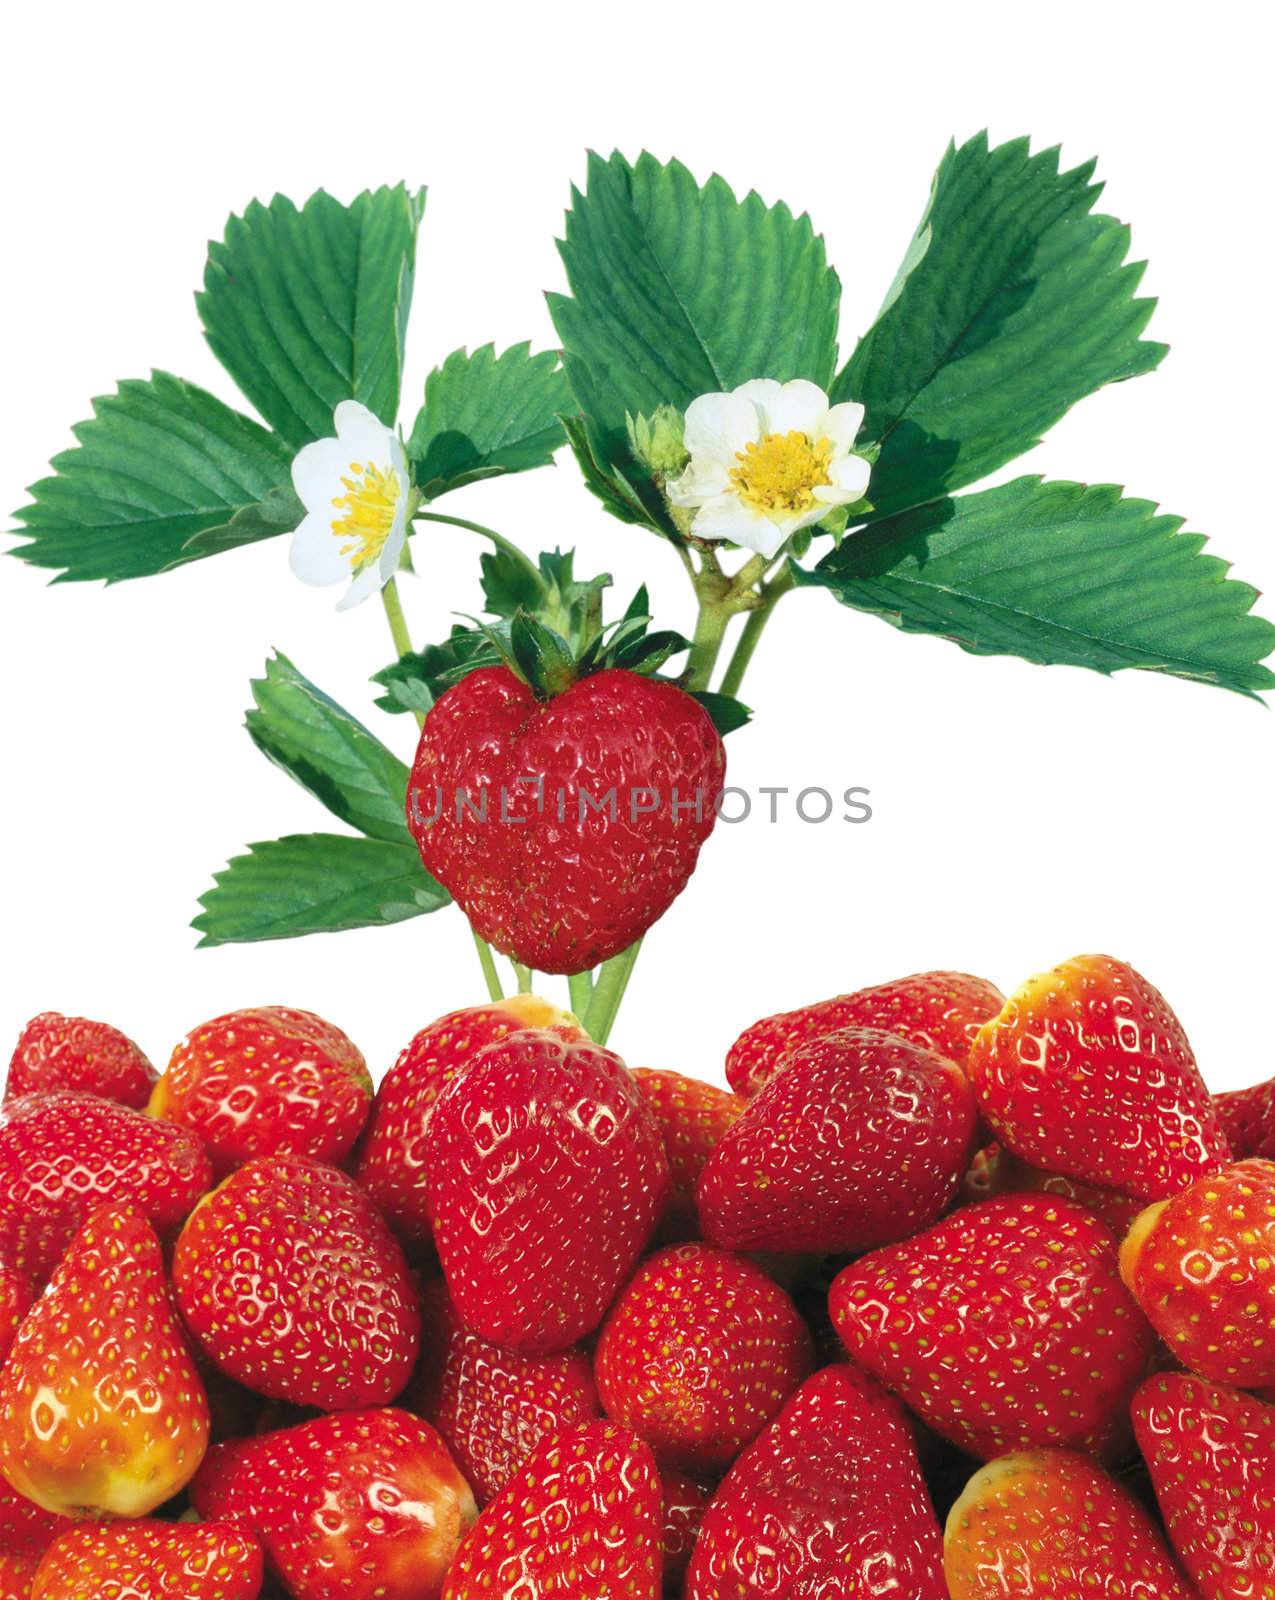 Strawberries by git